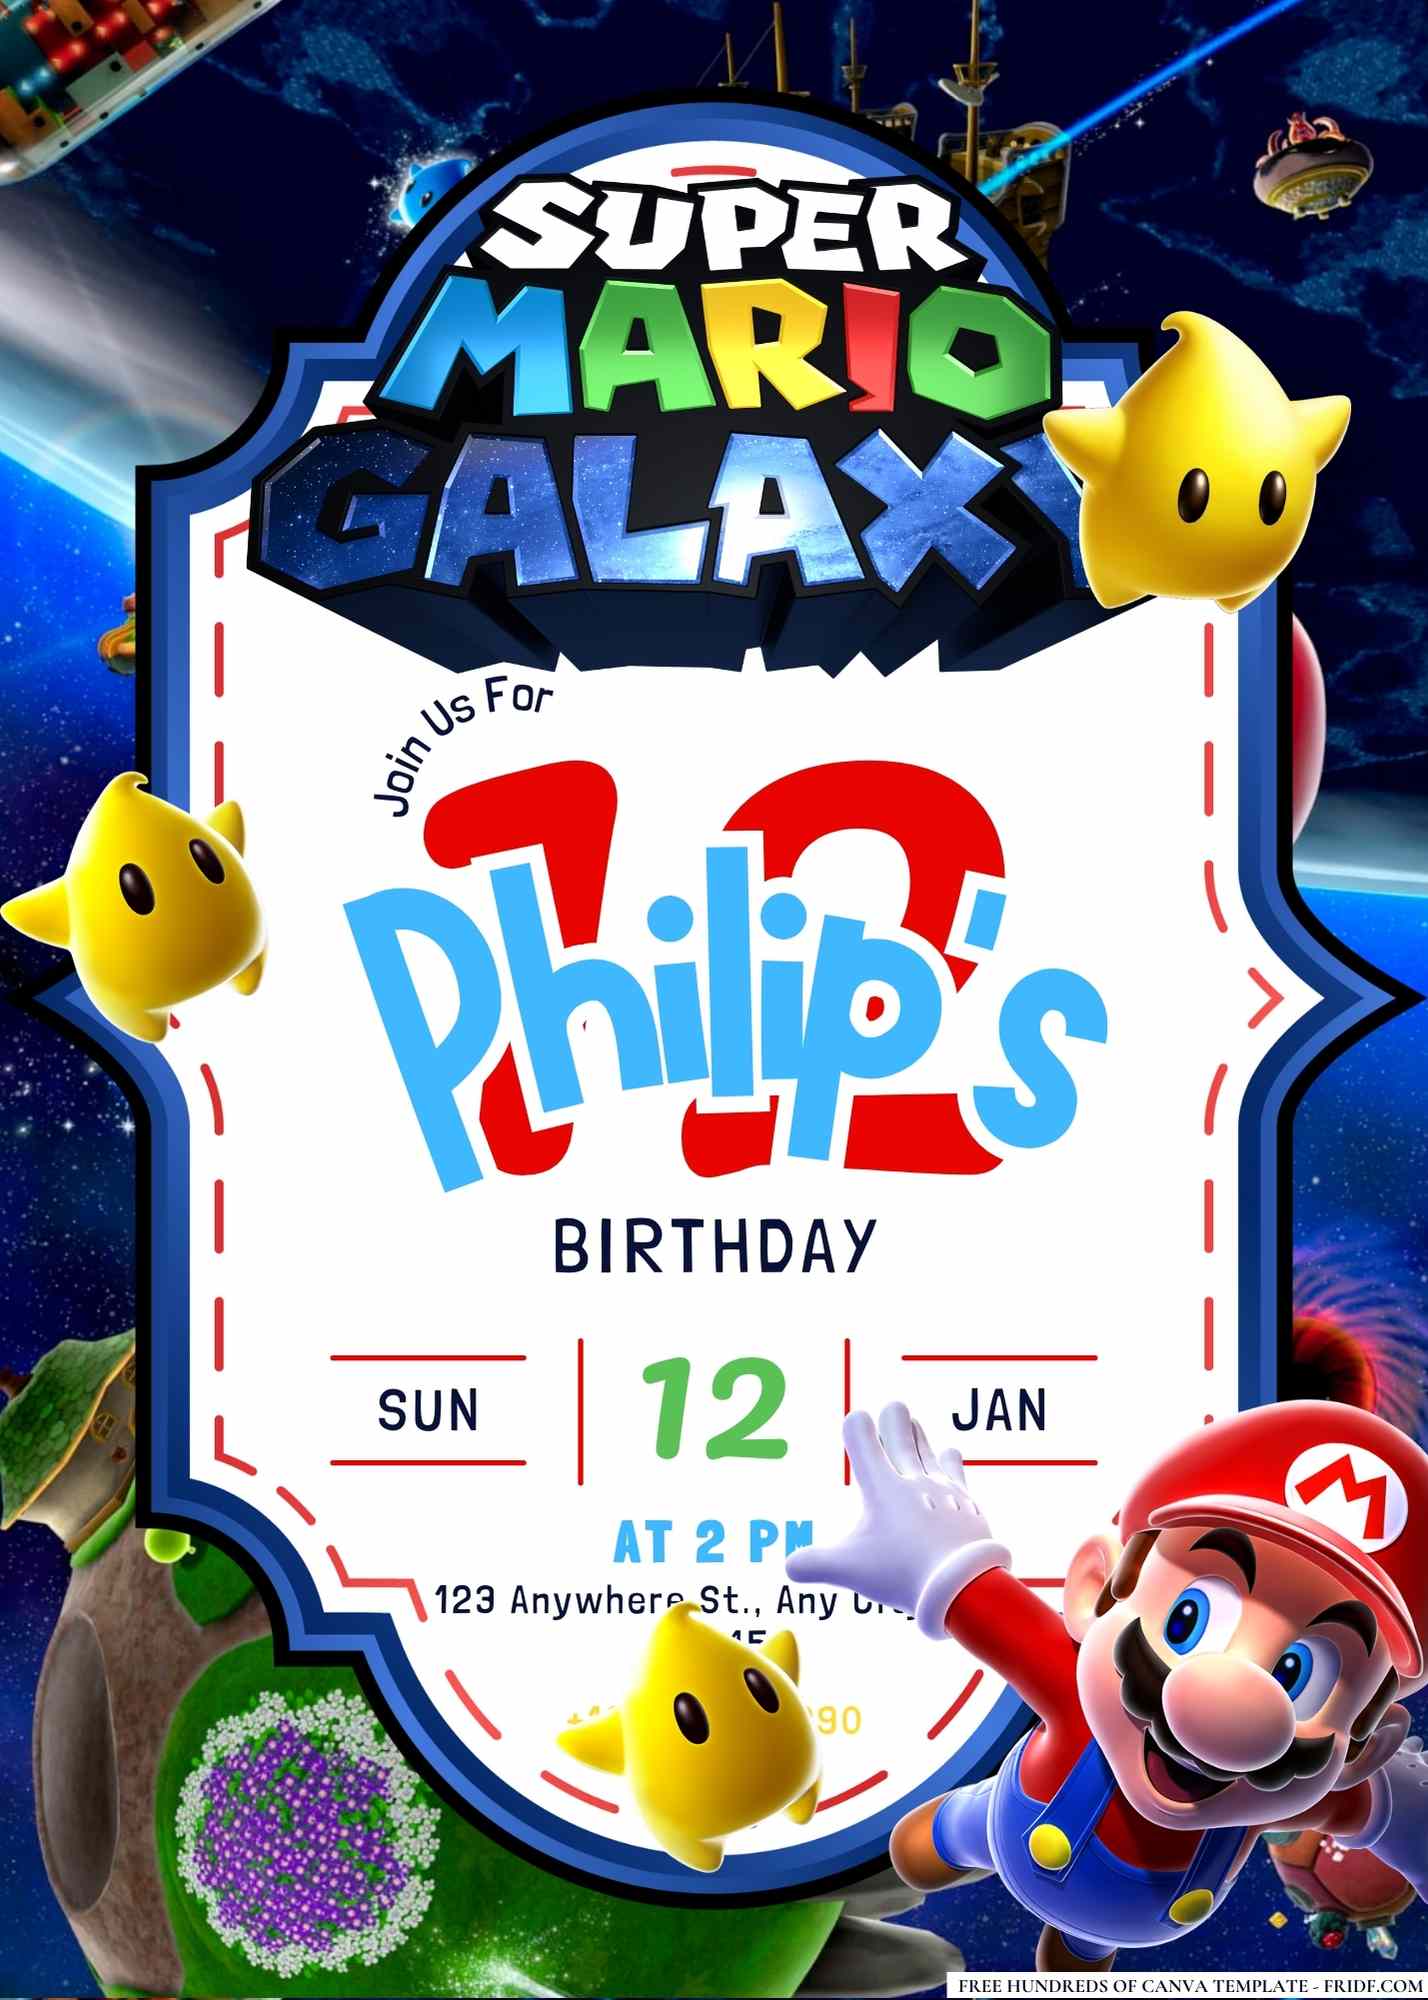 FREE Editable Super Mario Galaxy Birthday Invitation